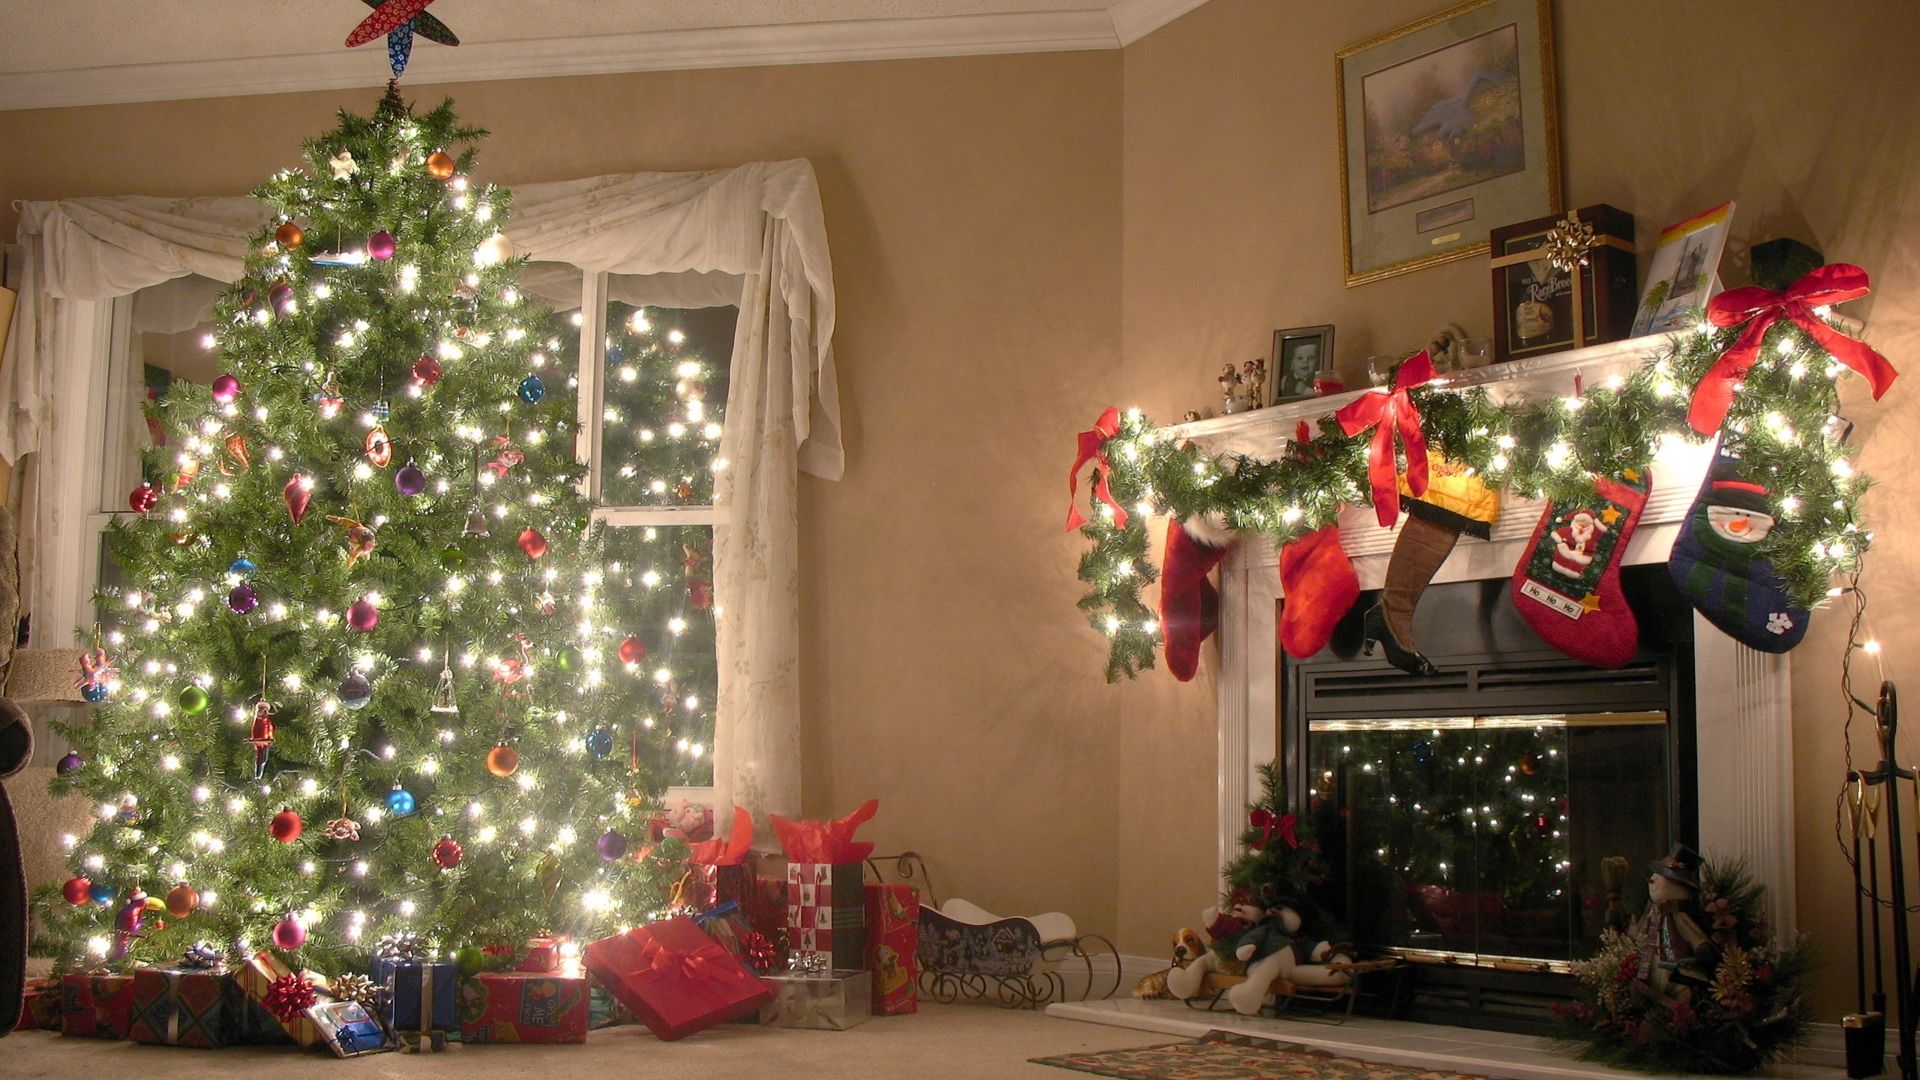 Christmas Tree Desktop